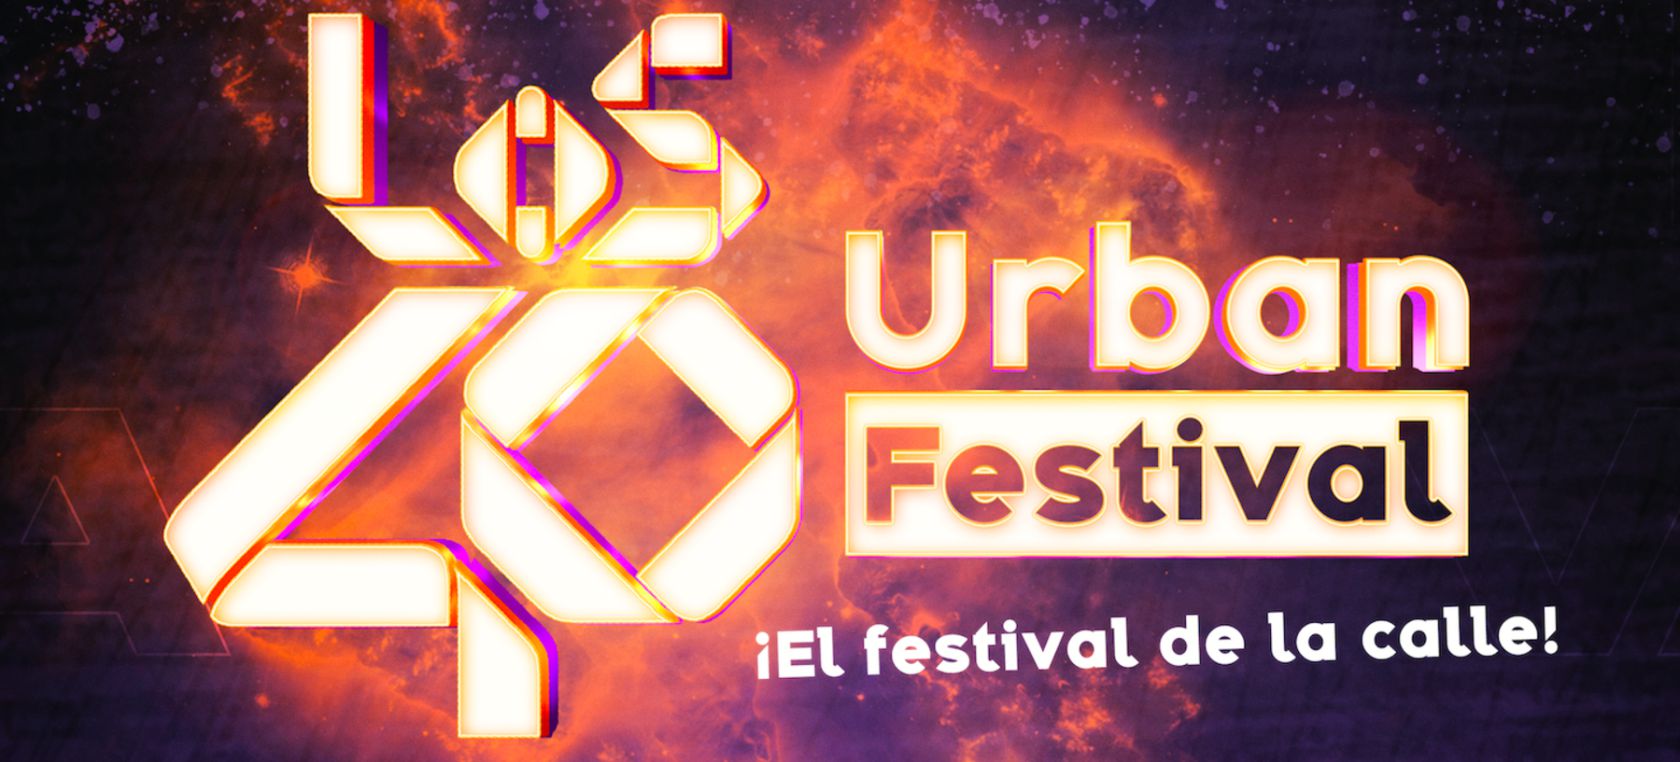 Llega LOS40 Urban Festival